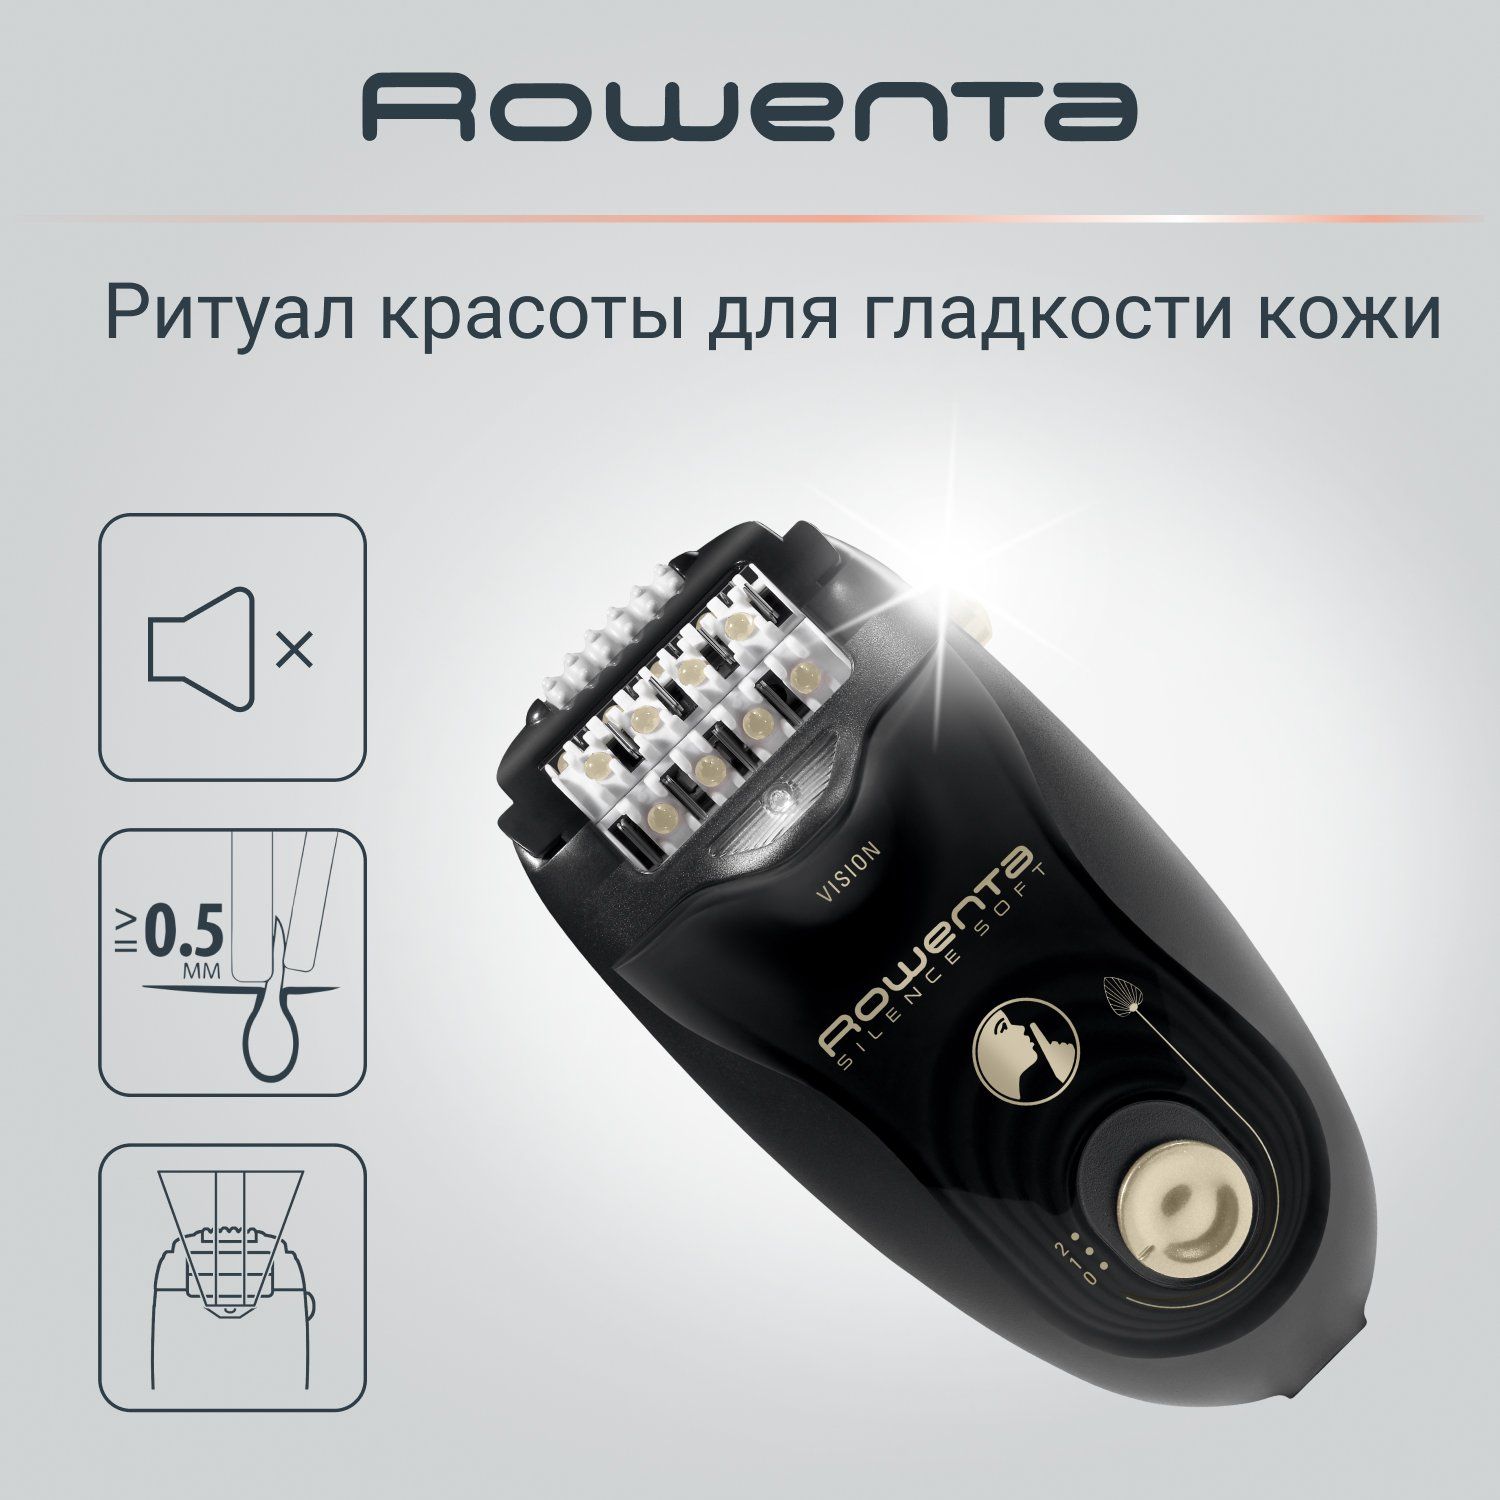 Эпилятор Rowenta Silence Soft EP5628F0, черный эпилятор rowenta ep9102f0